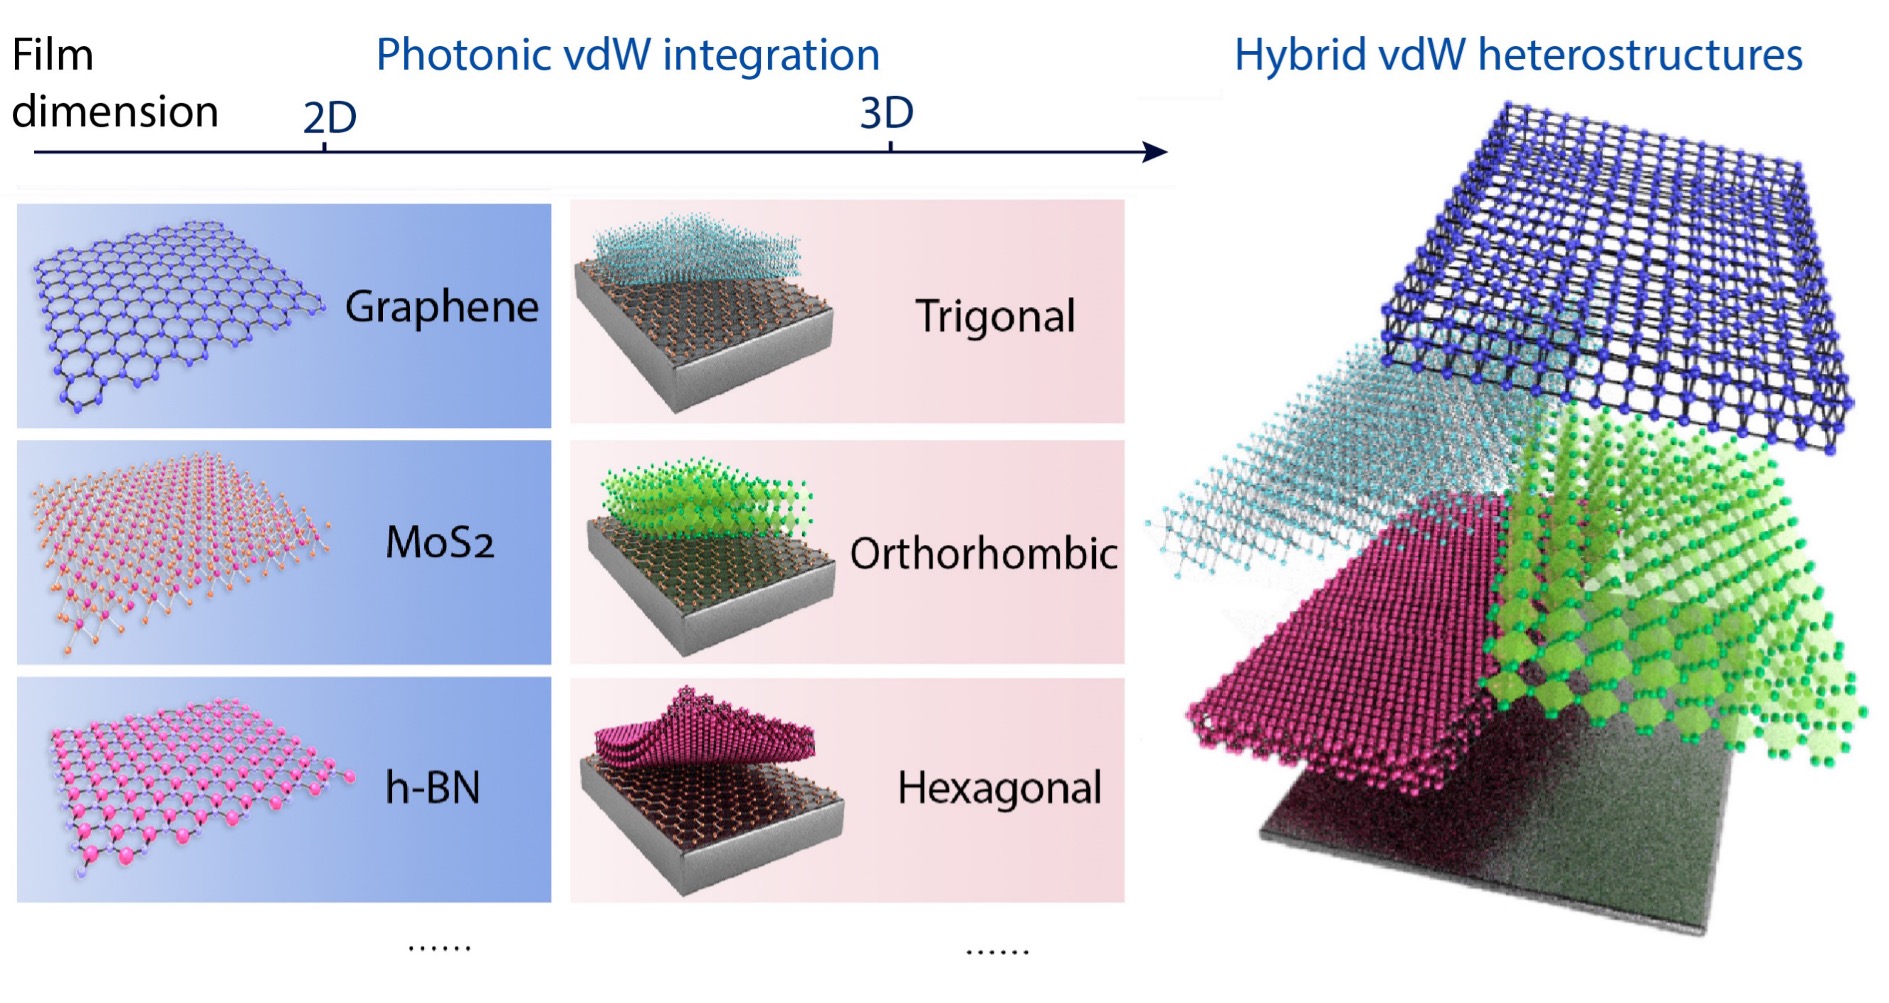 Freestanding 2D and 3D nanomembranes for photonic van der Waals integration